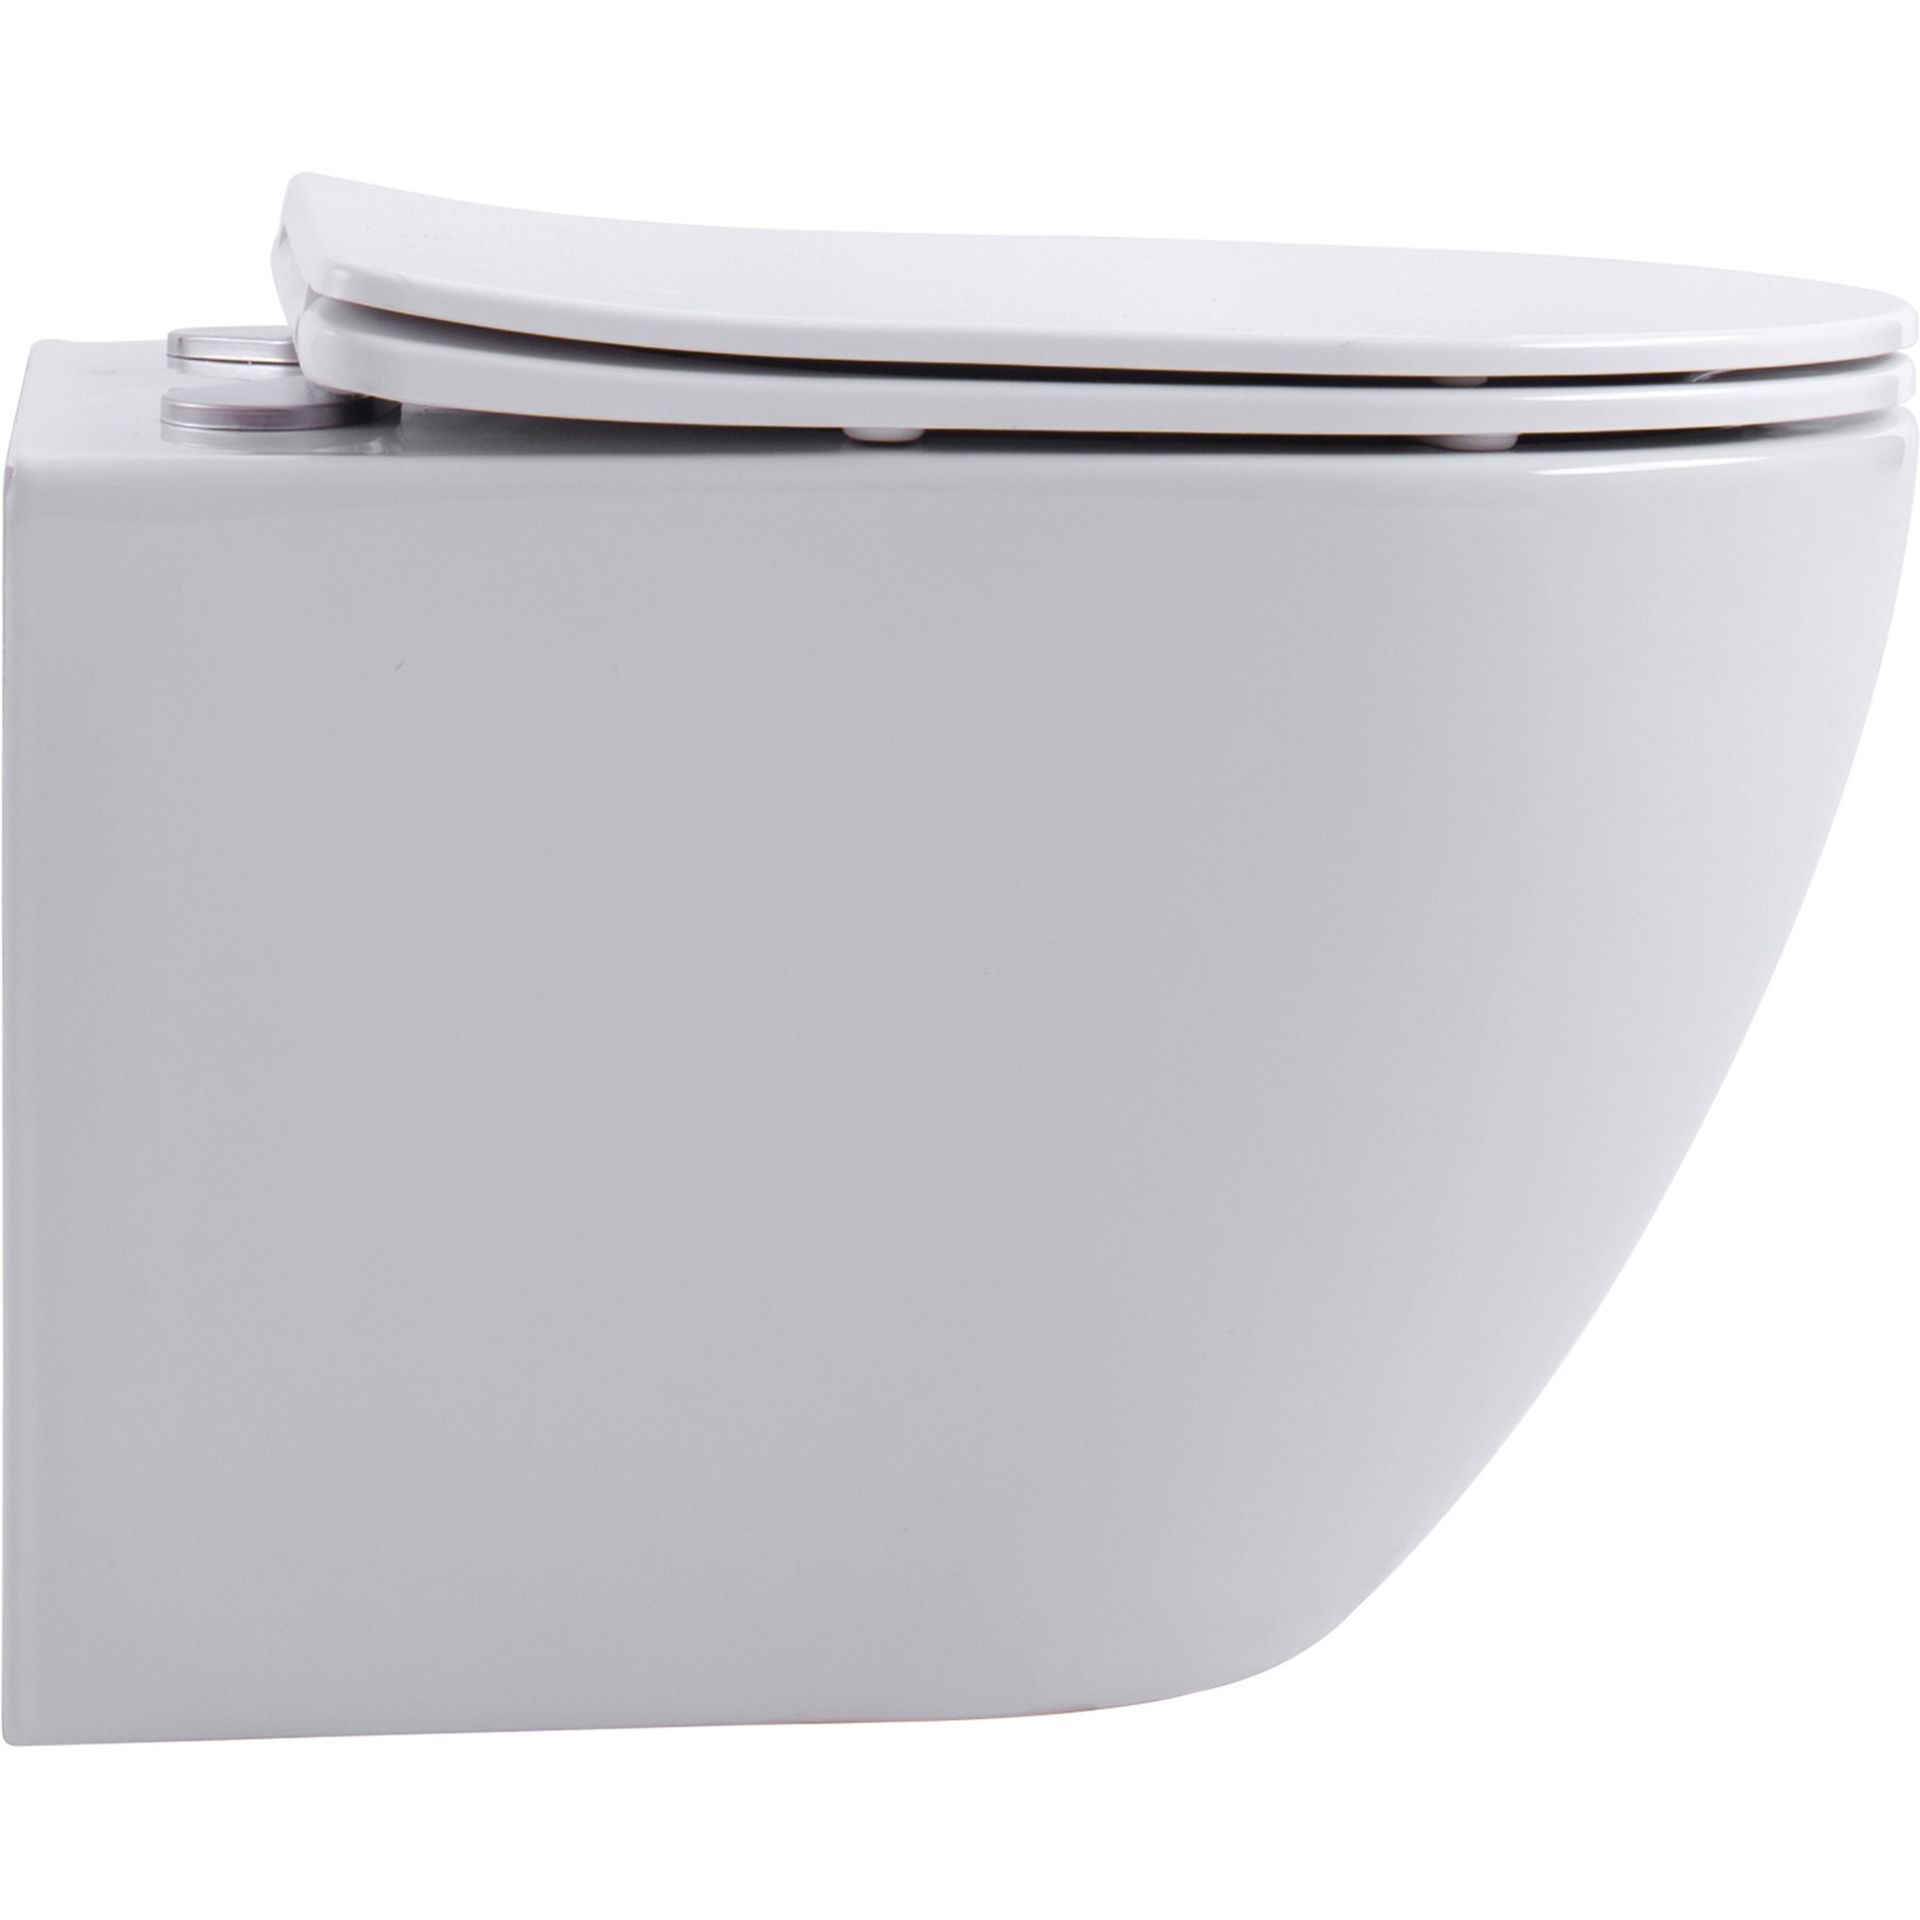 NEW & BOXED KARCENT Rimless Washdown Wall Hung Toilet. MATT WHITE. This Rimless Matt White wall-hung - Bild 2 aus 2